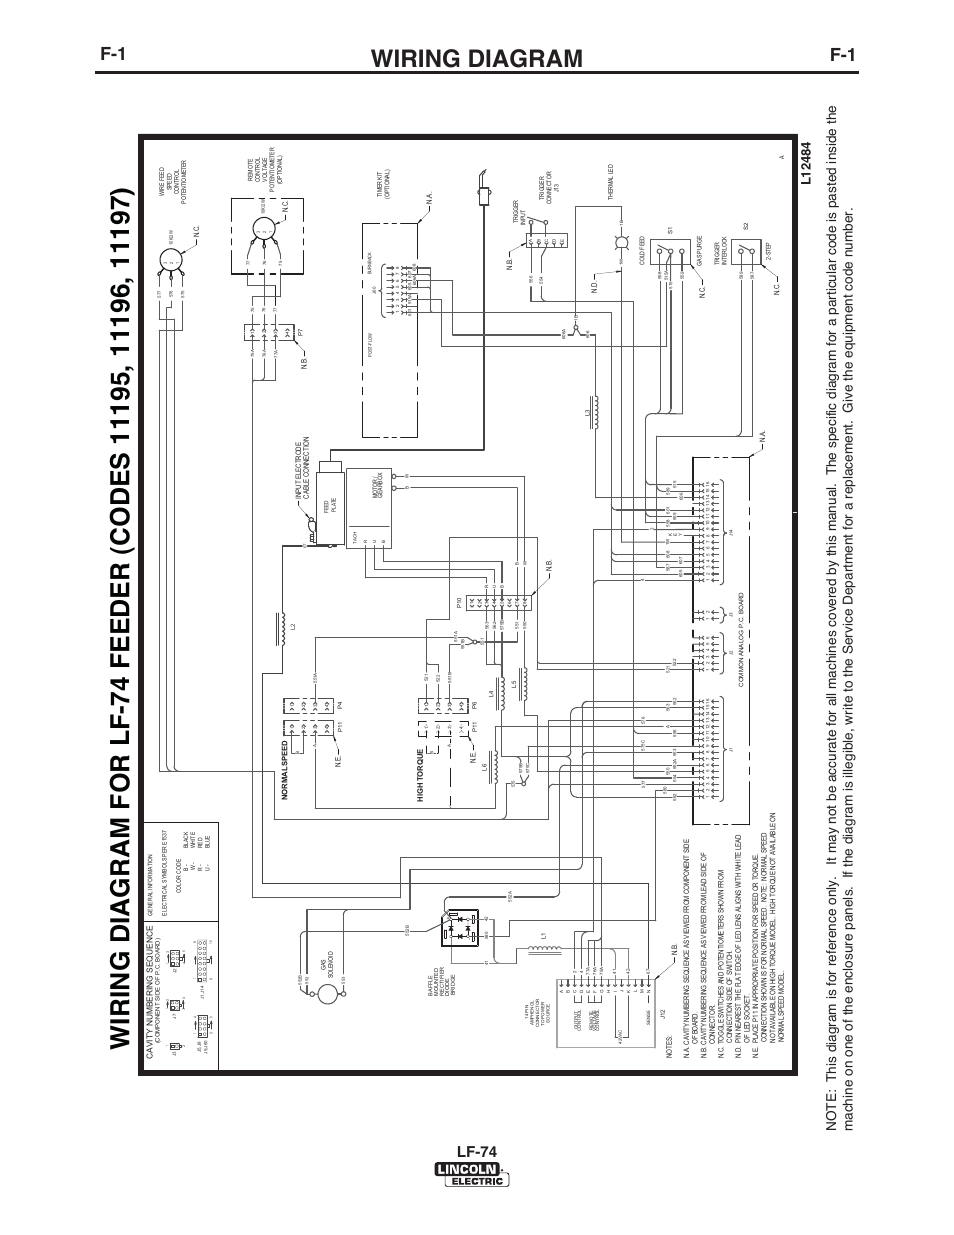 Wiring diagram, Lf-74 | Lincoln Electric IM872 LF-74 WIRE FEEDER User